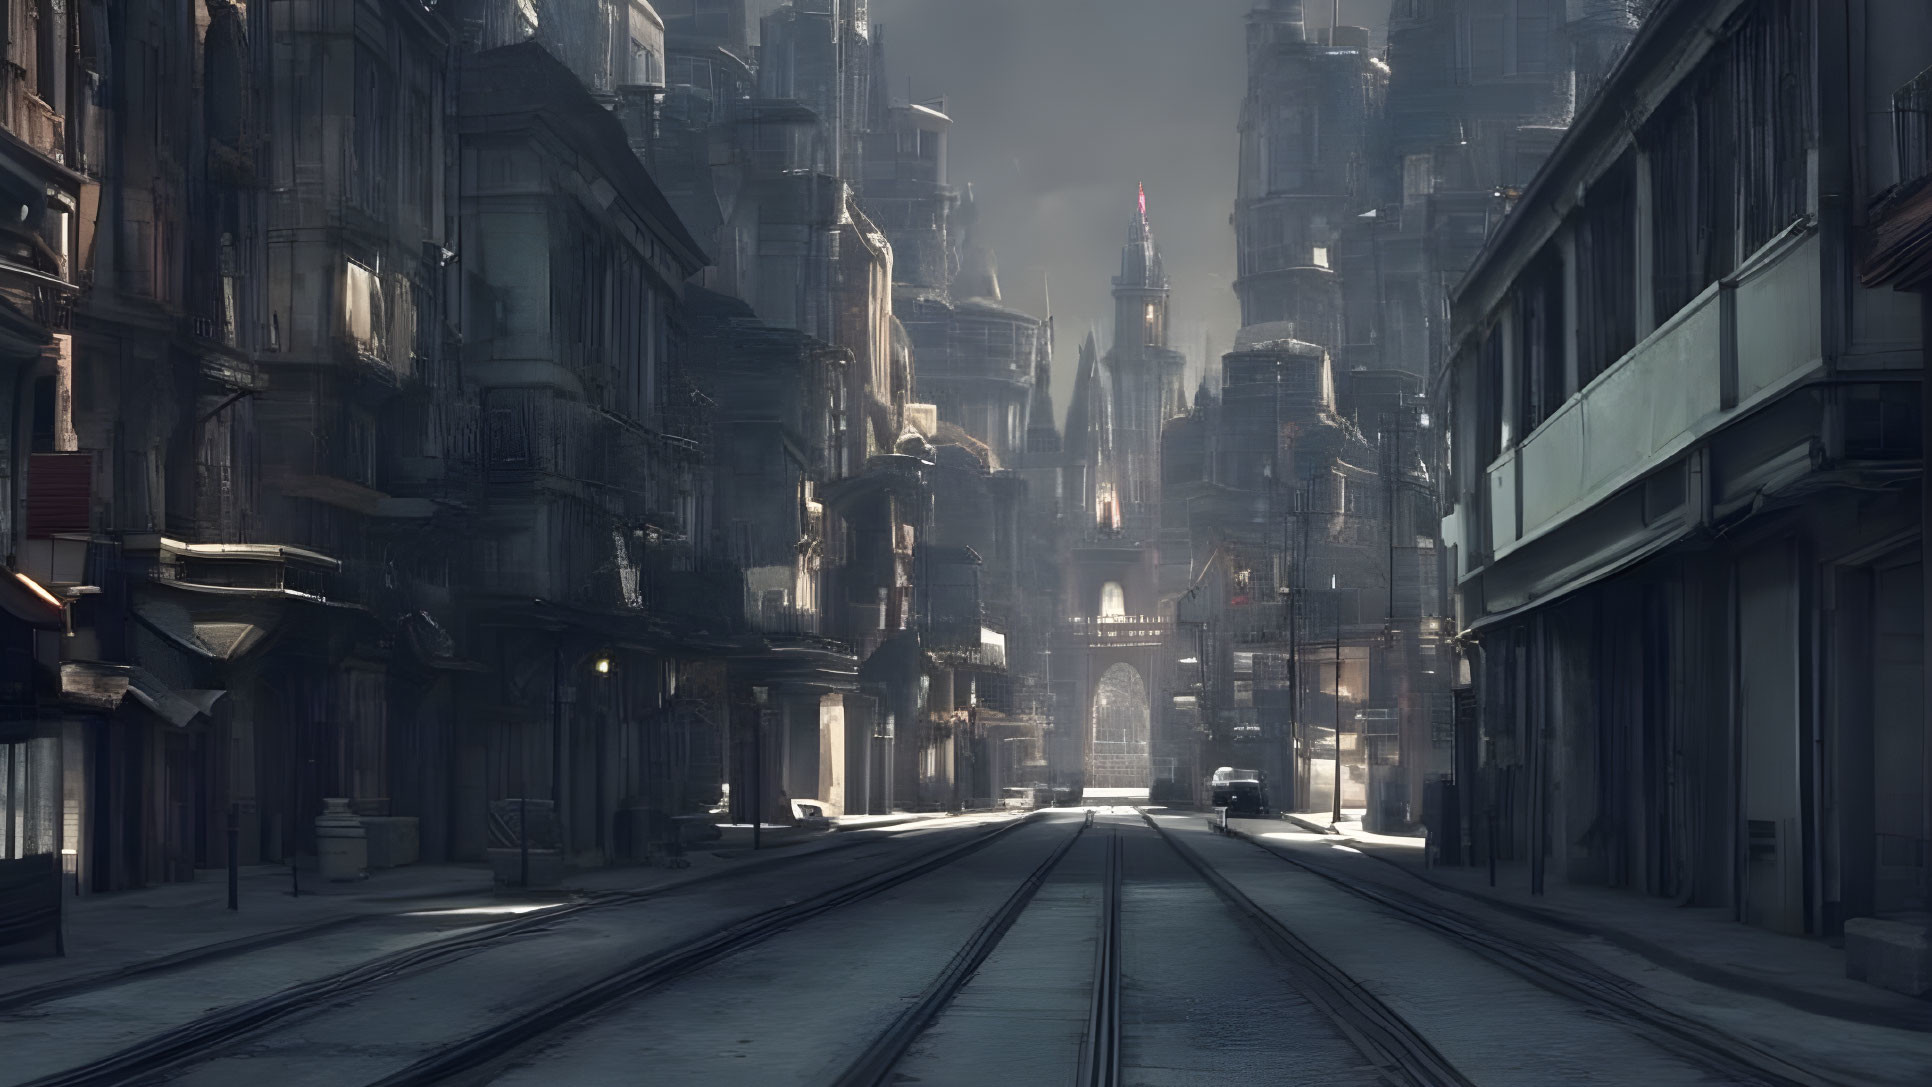 Gothic architecture on urban street with tram tracks under hazy sky